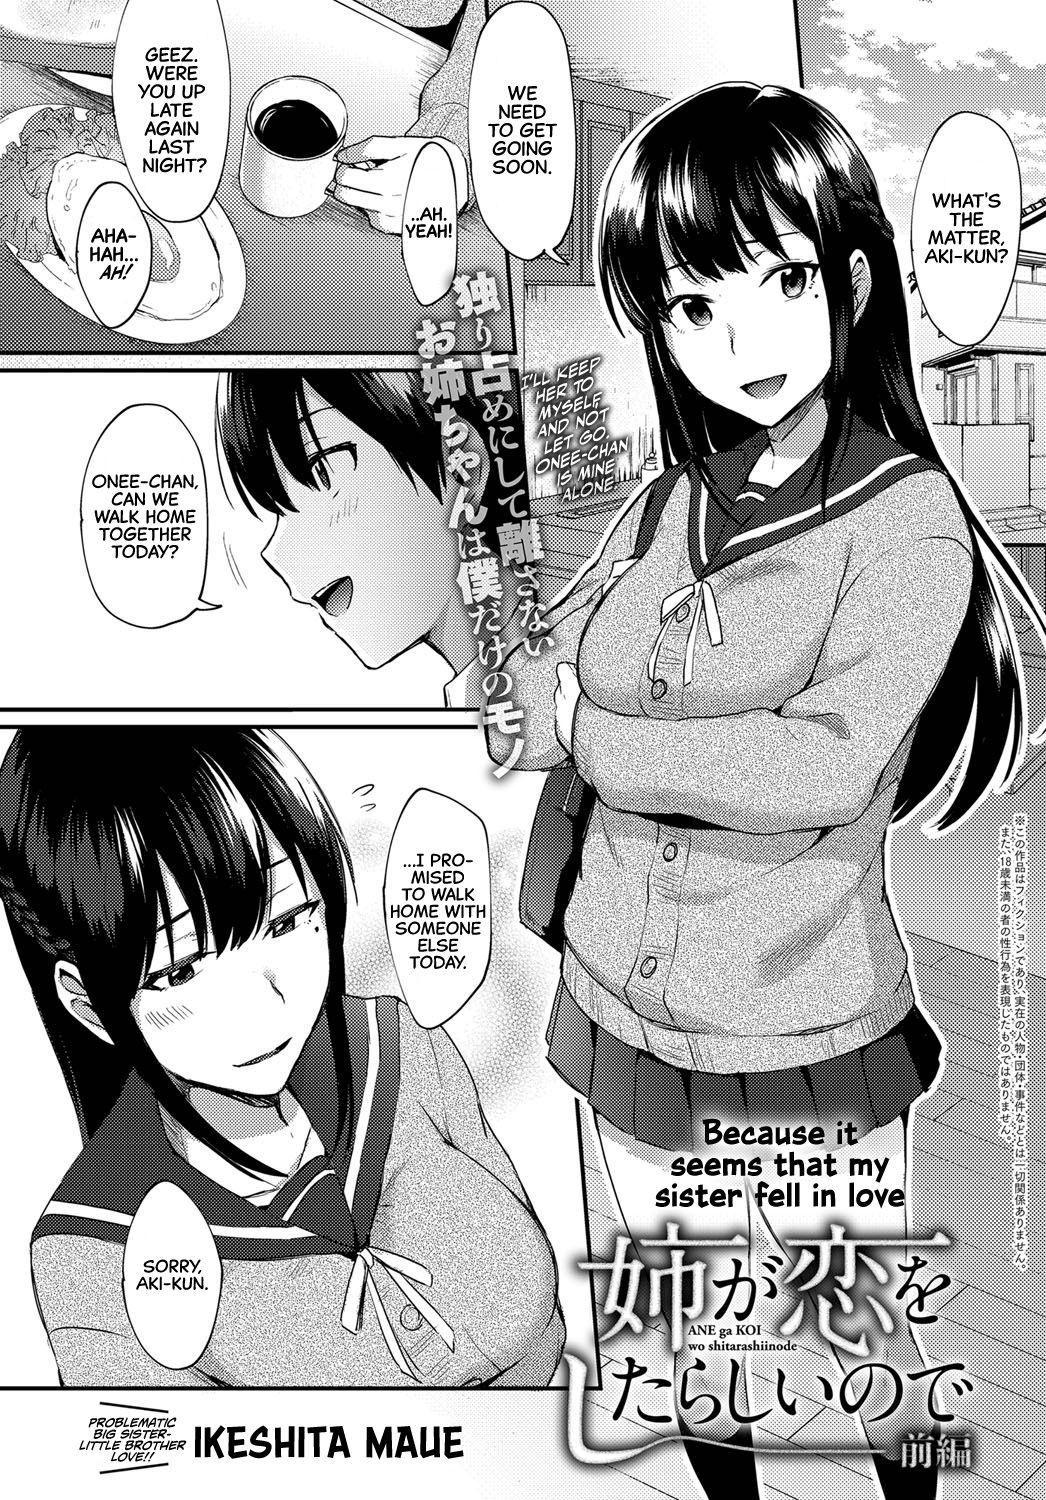 Orgy Ane ga Koi wo shitarashiinode | Because It Seems That My Sister Fell In Love Pmv - Page 2